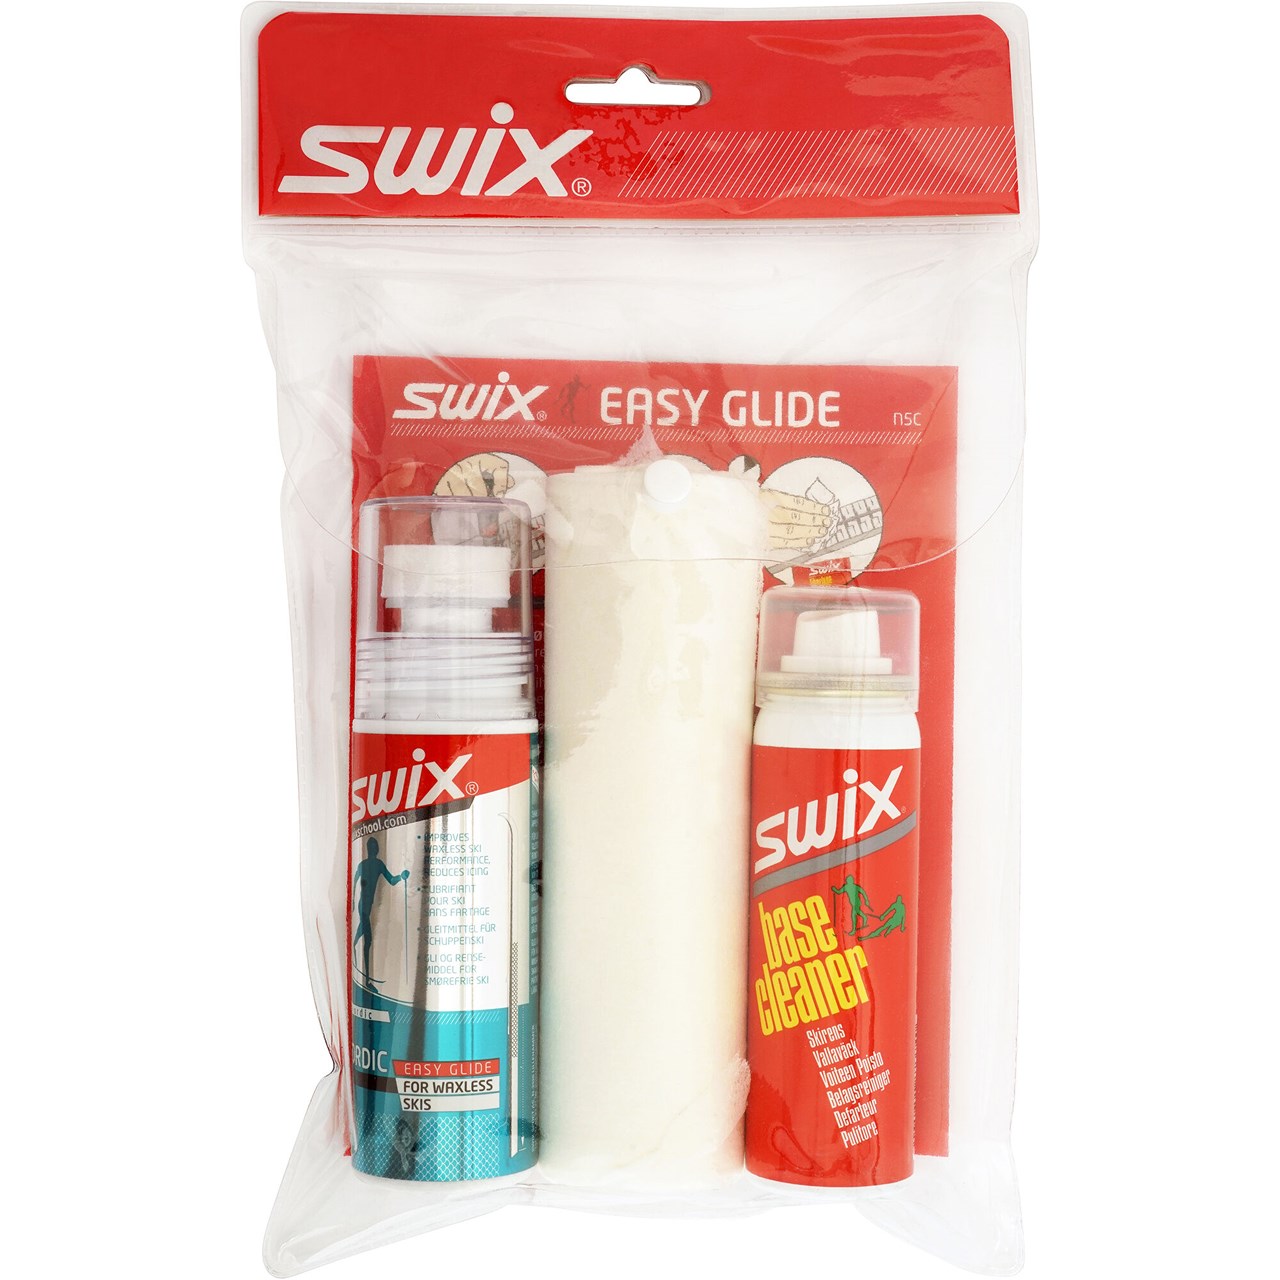 SWIX Rens/Glide kit for No-Wax